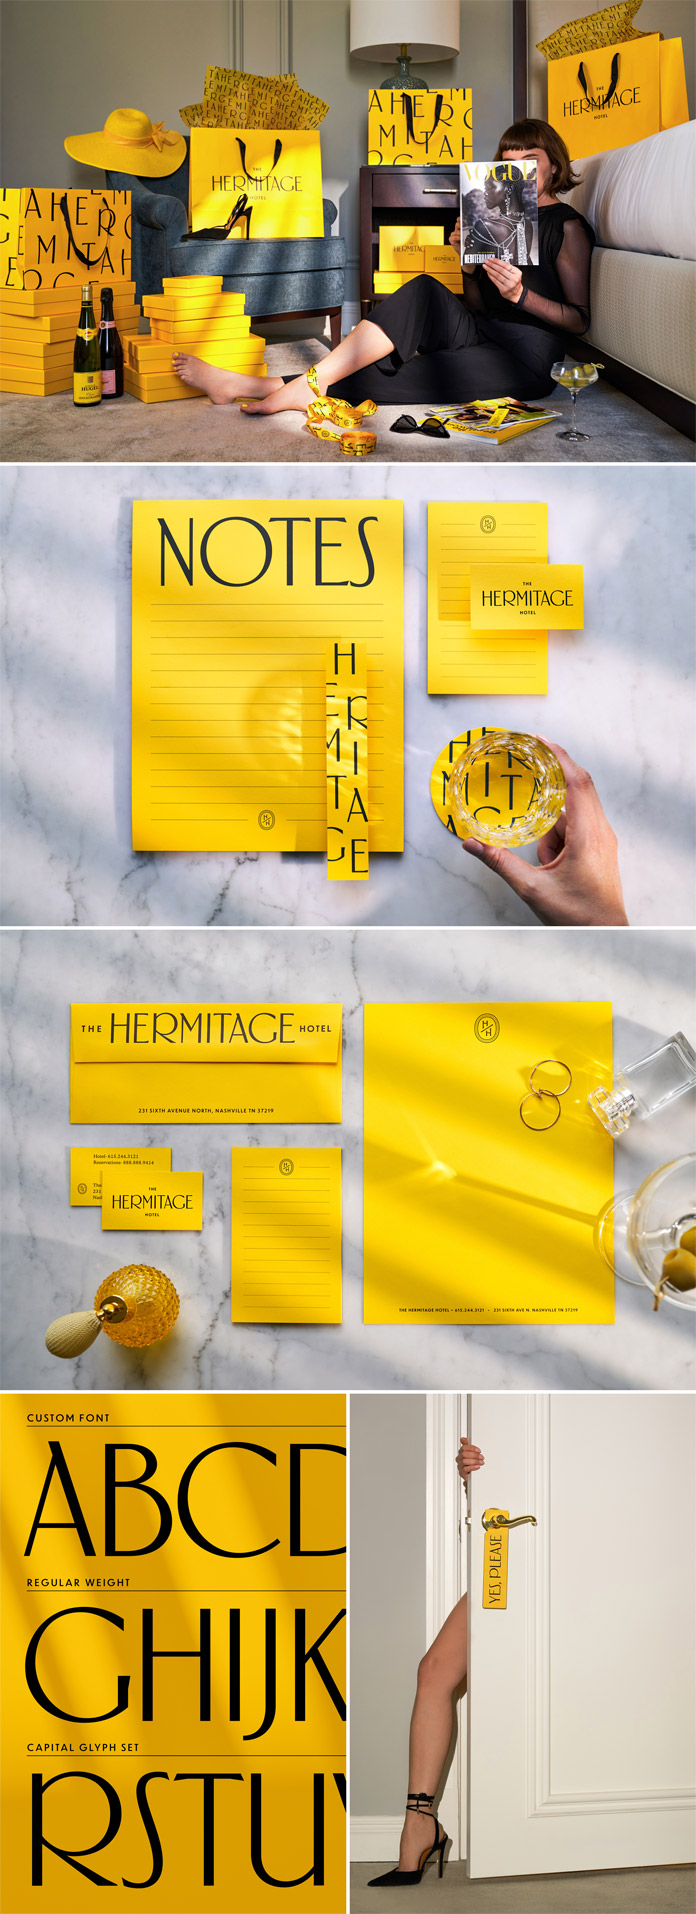 Hermitage Hotel rebranding by creative studio Mucca